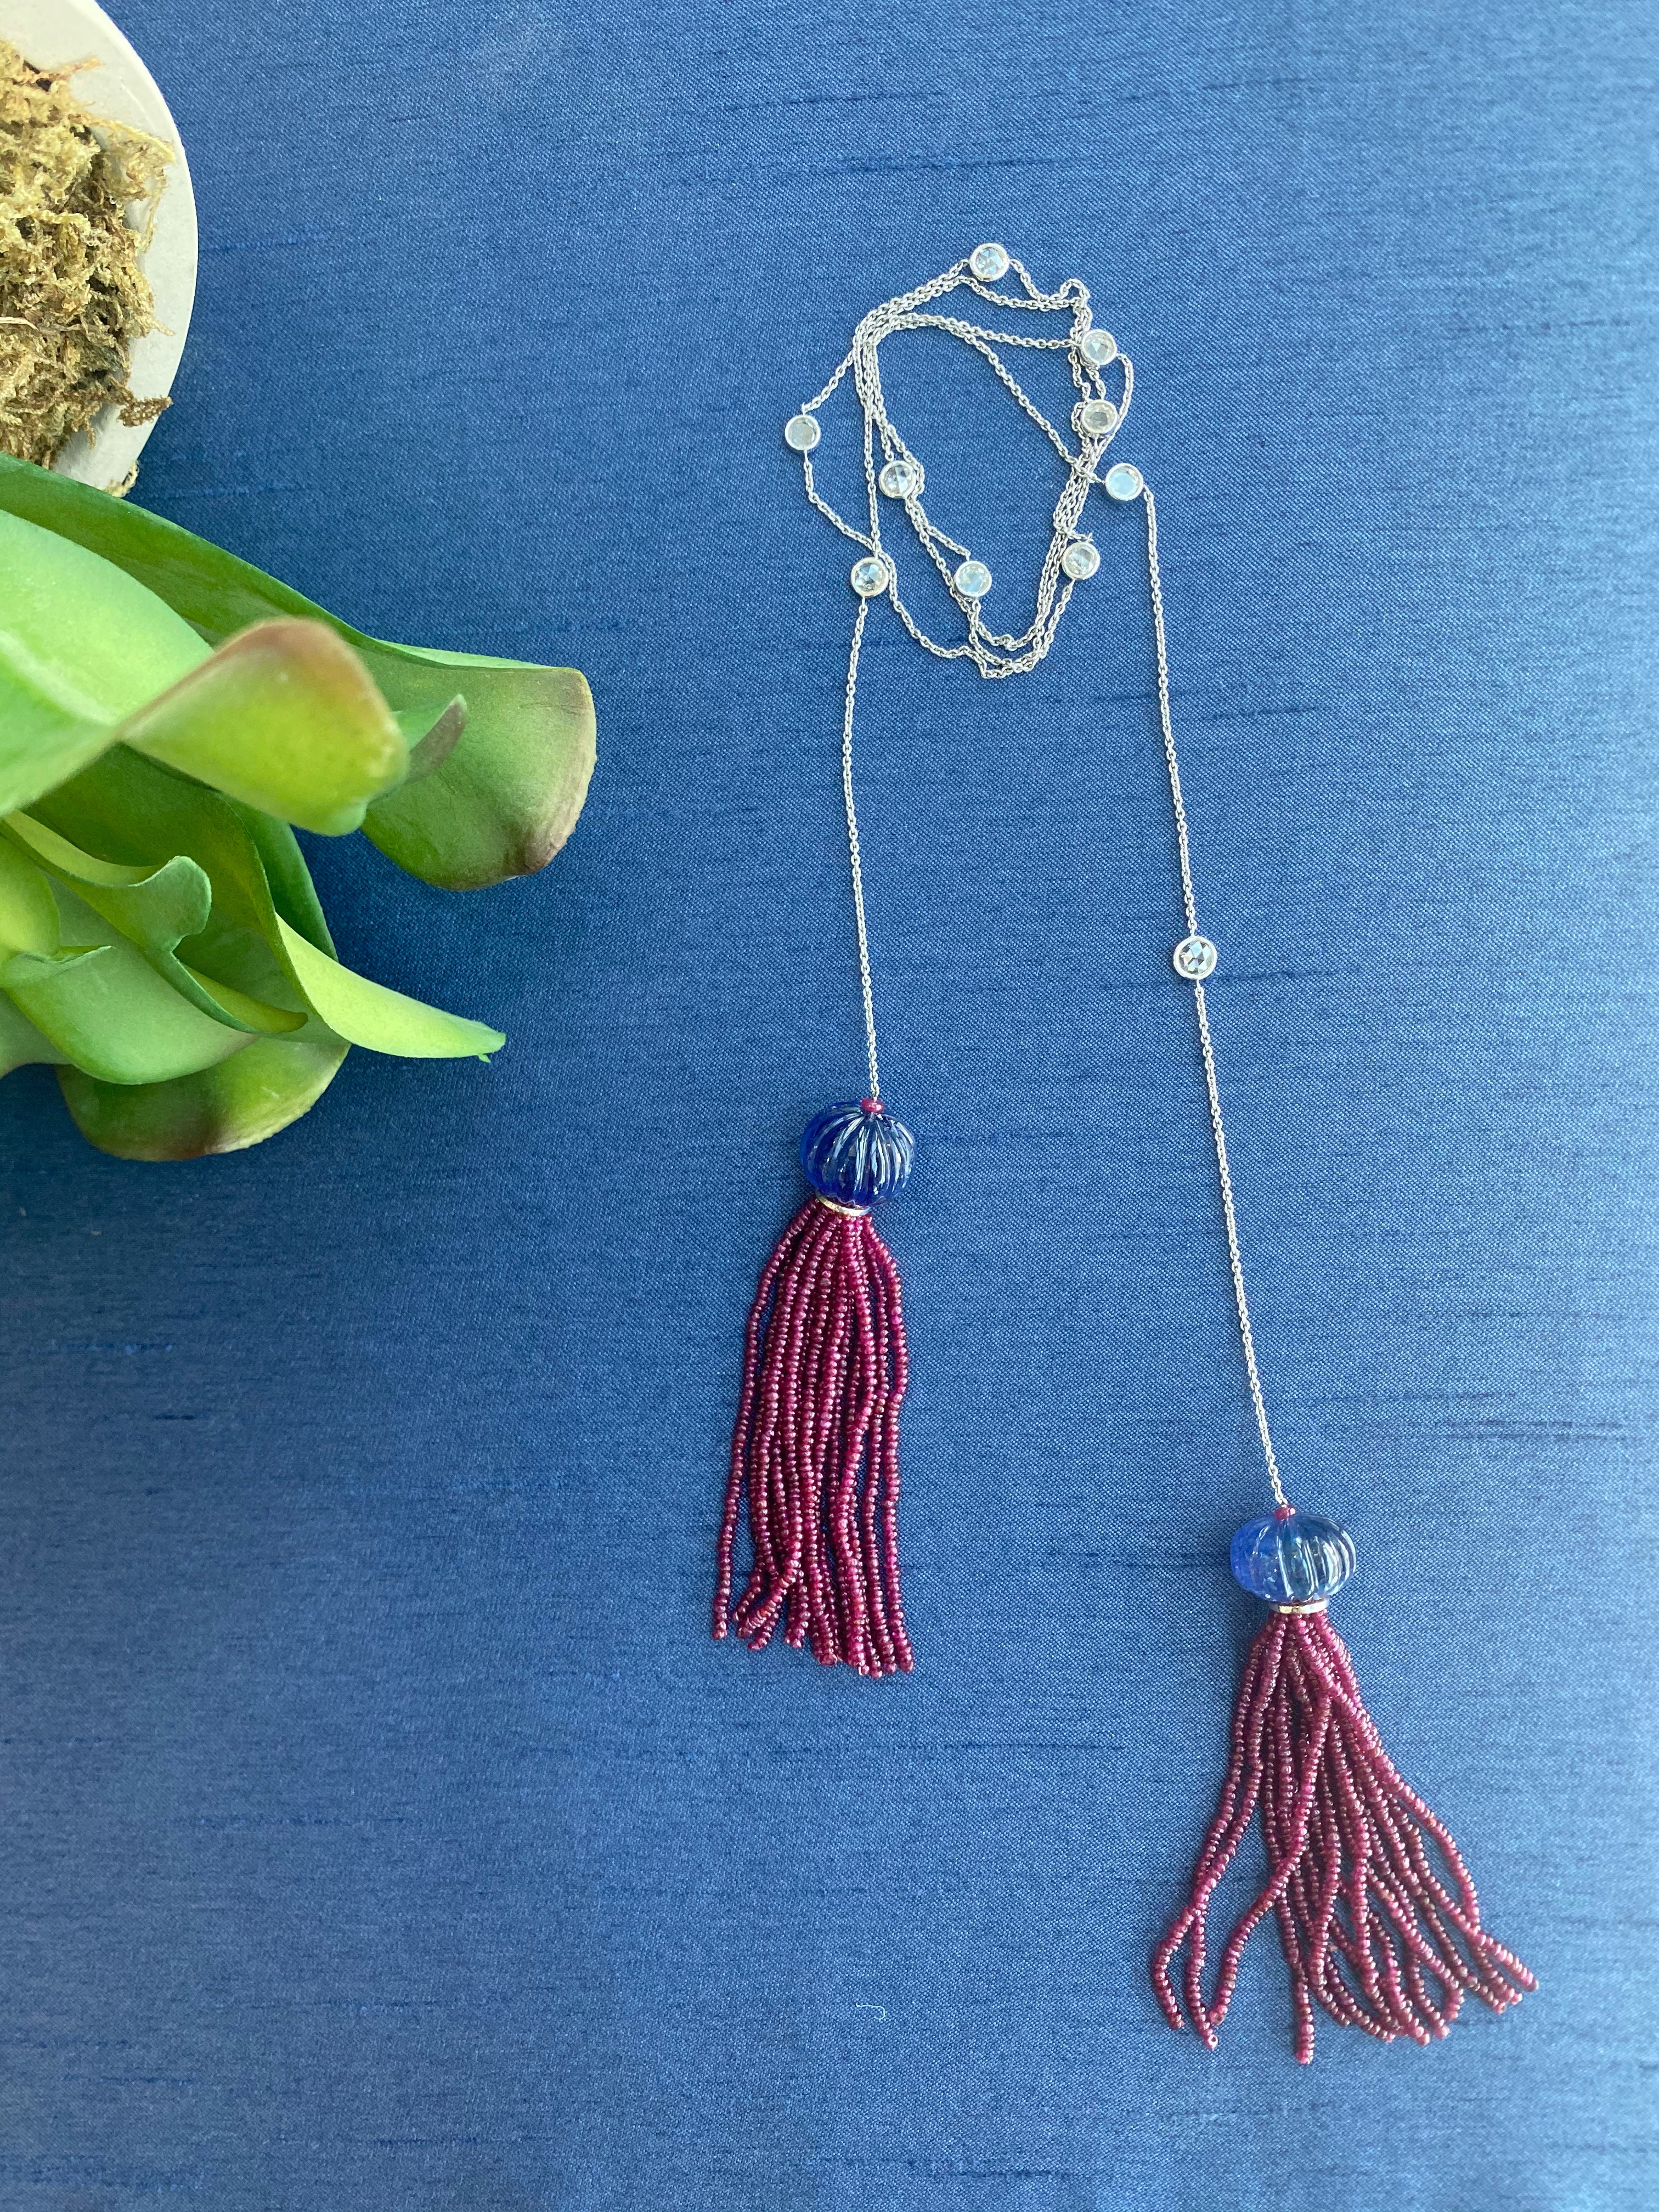 Ruby Beads, Tanzanite Beads & Diamond Tassel Necklace